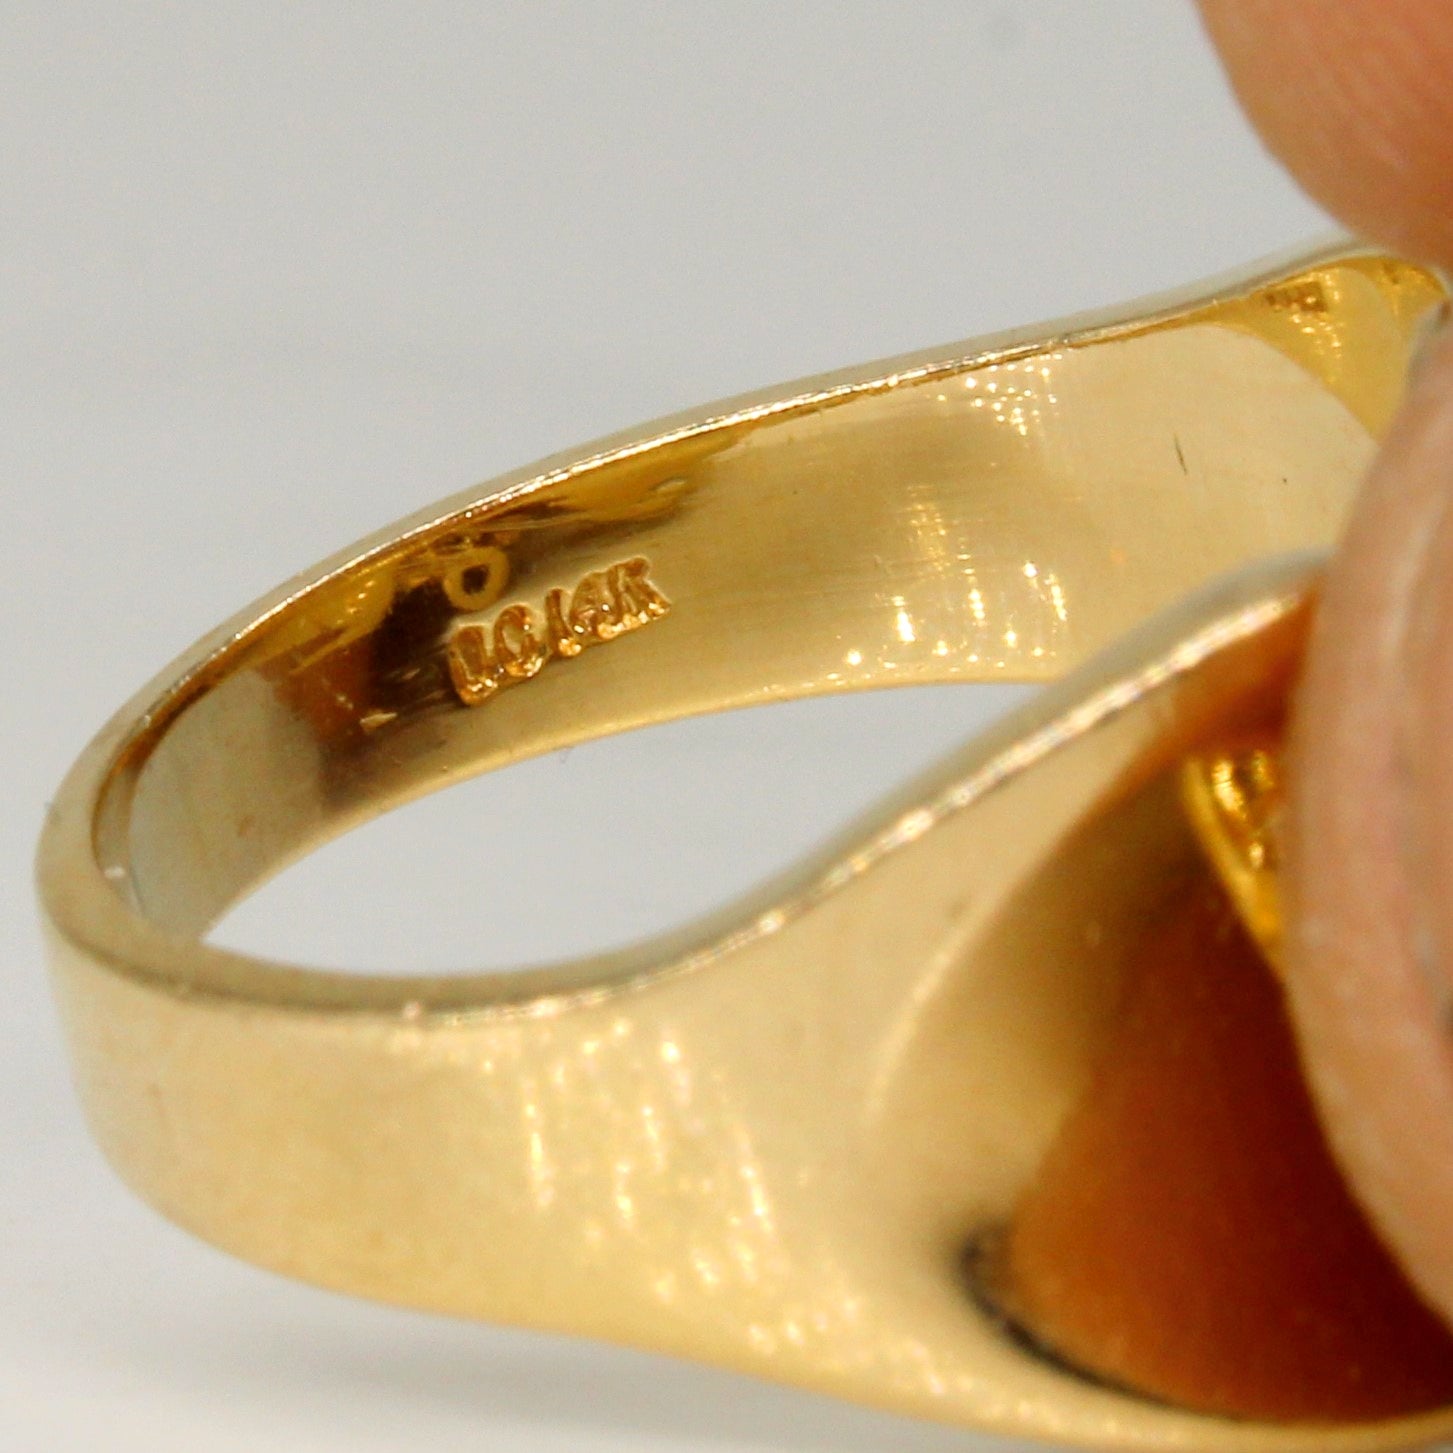 Pear Cut Amethyst & Diamond Ring | 0.70ct, 0.42ctw | SZ 6.25 |